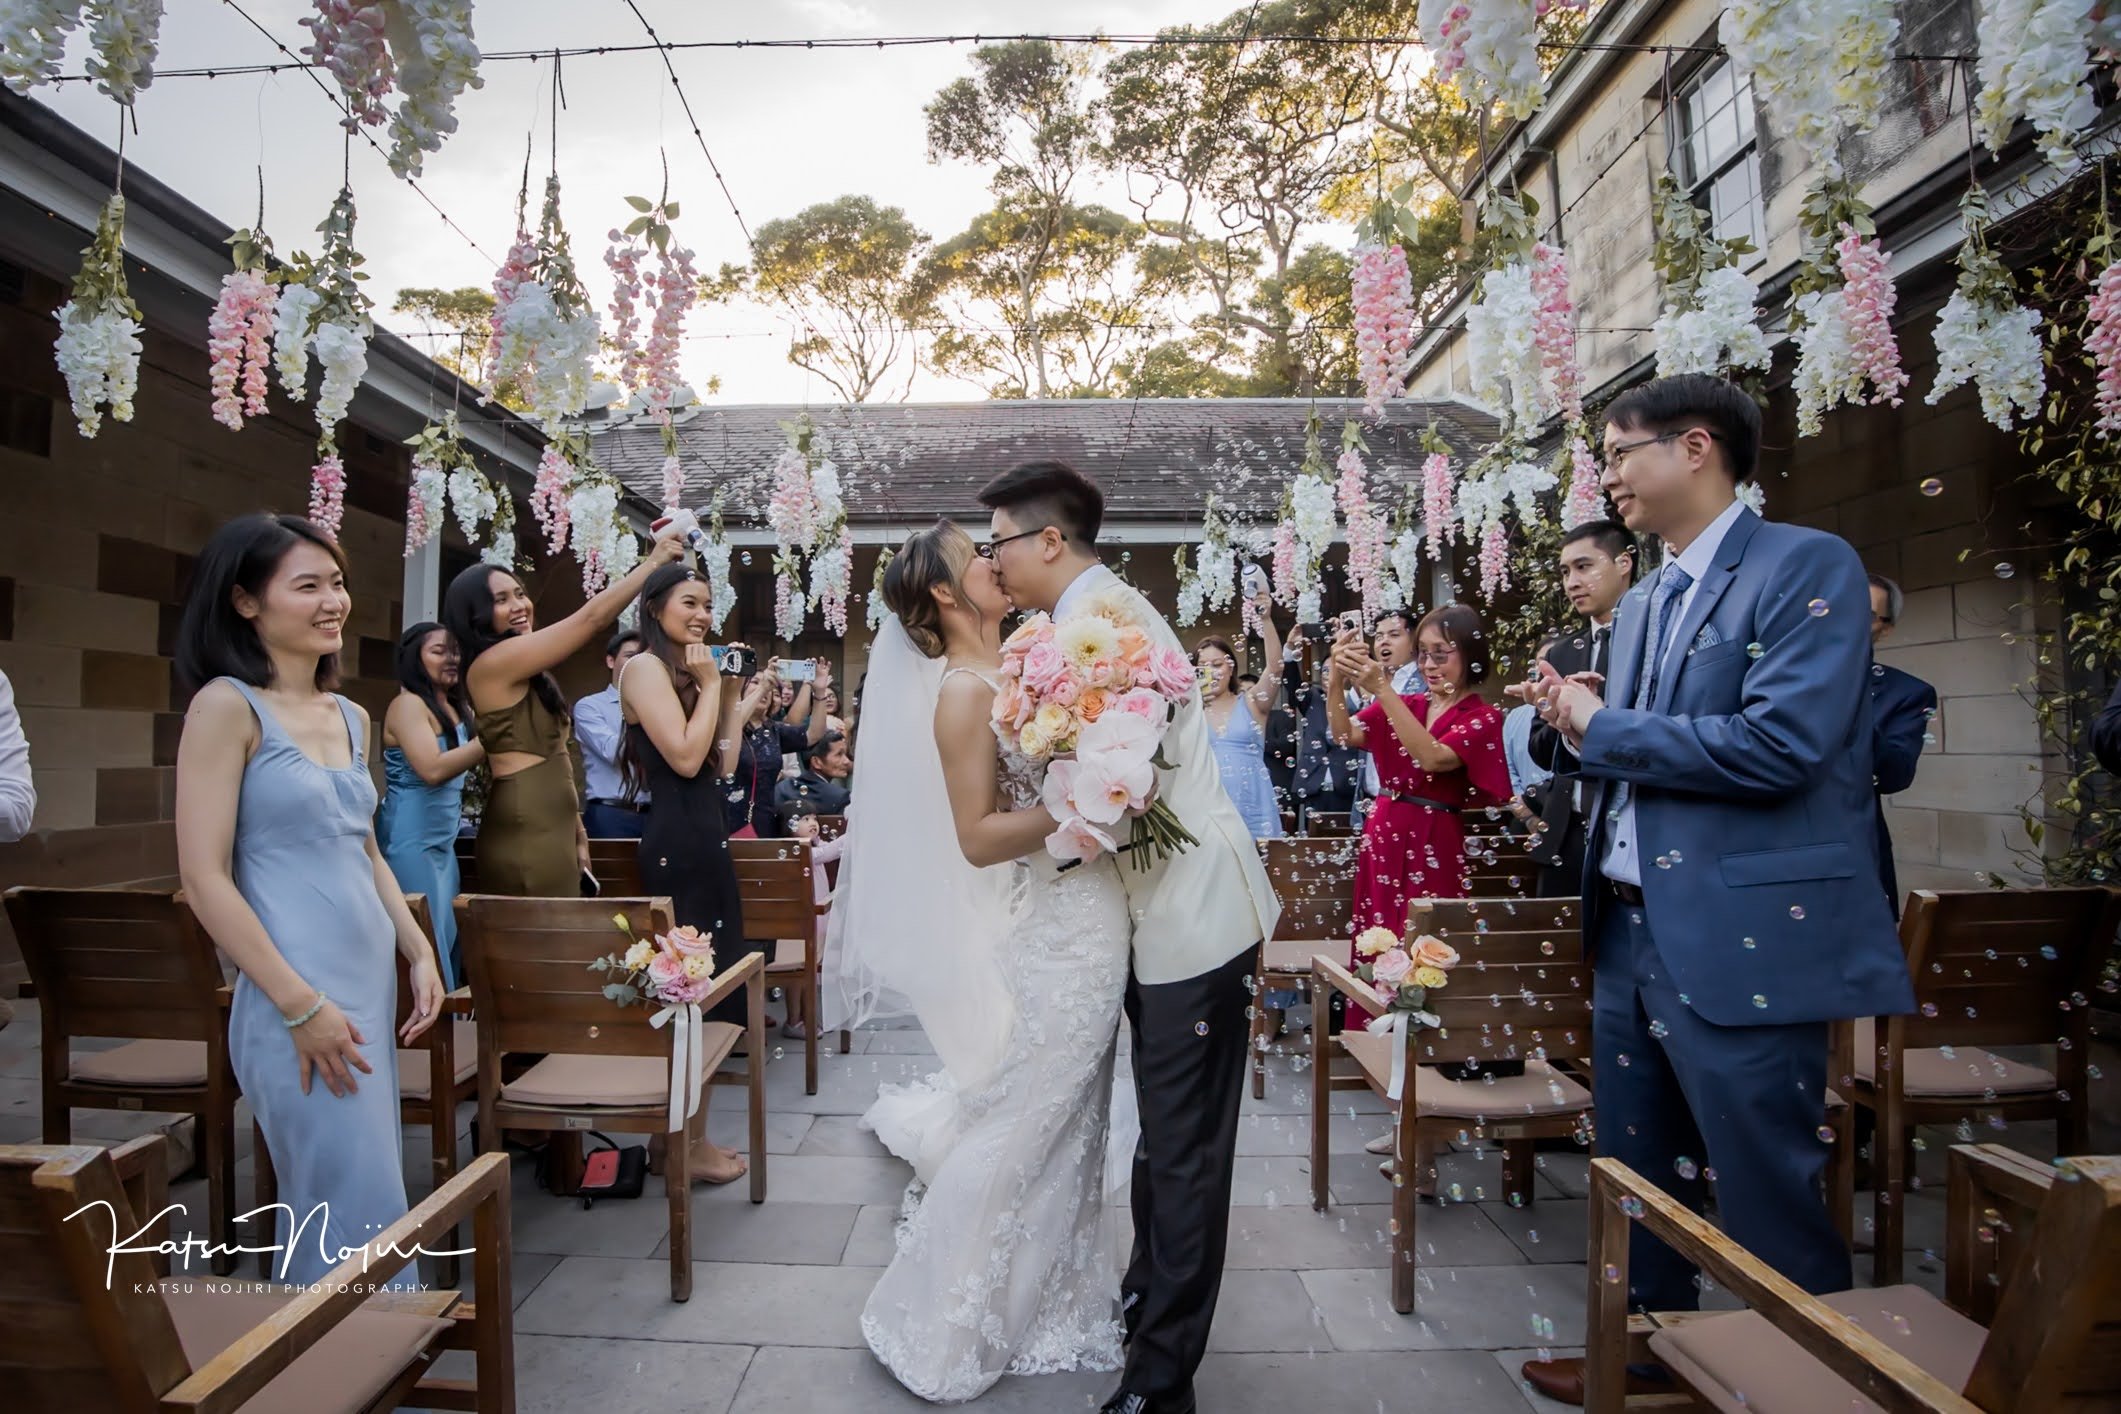 Sydney Wedding Photography by Katsu-394.jpg